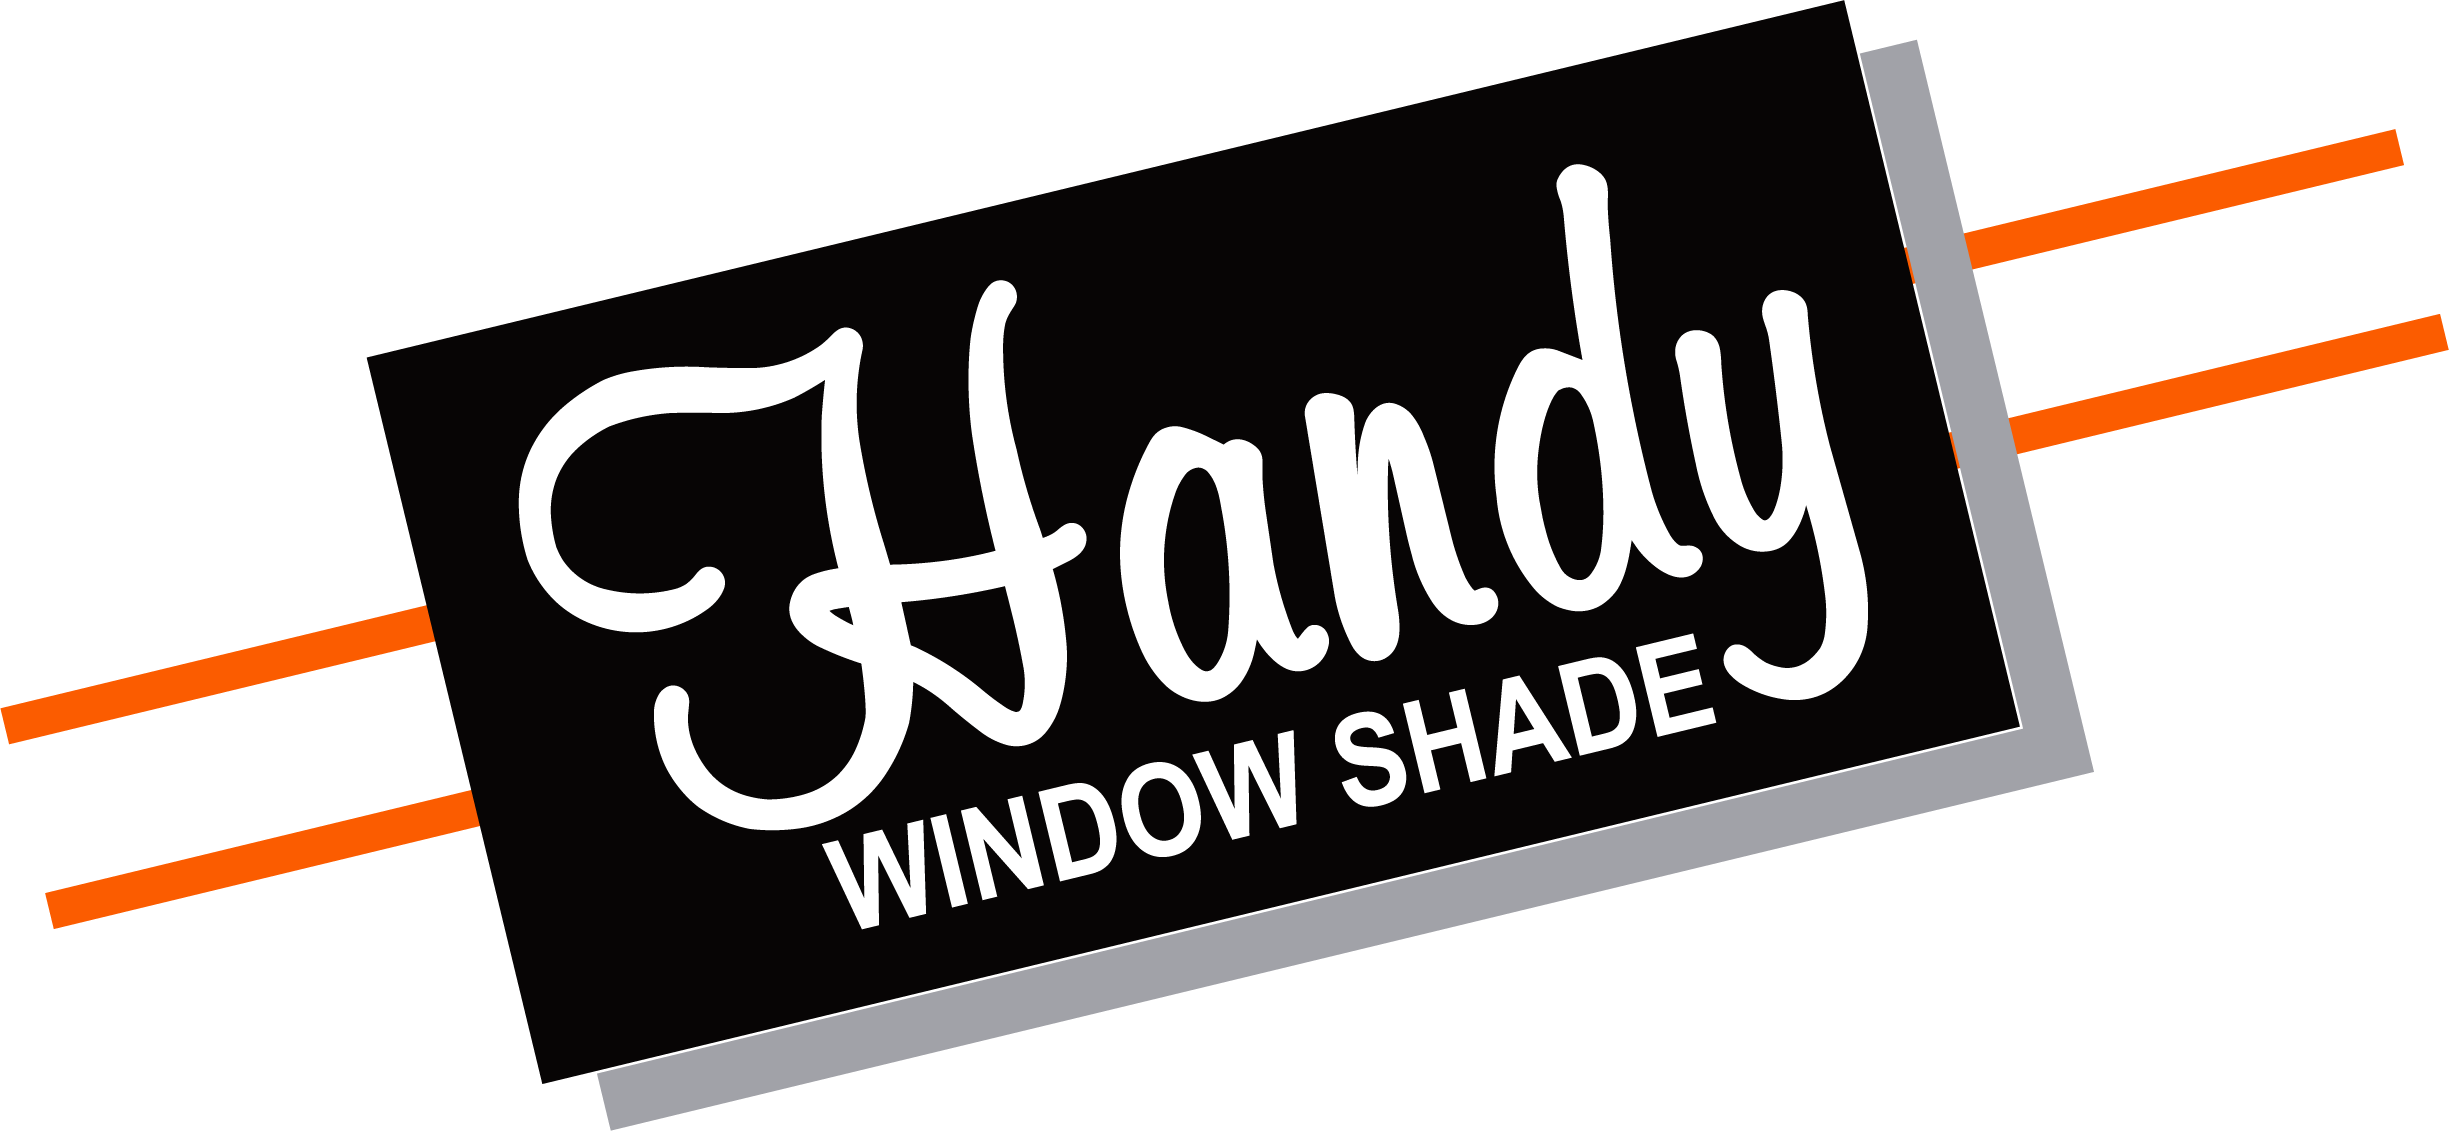 Handy Window Shade - Cincinnati